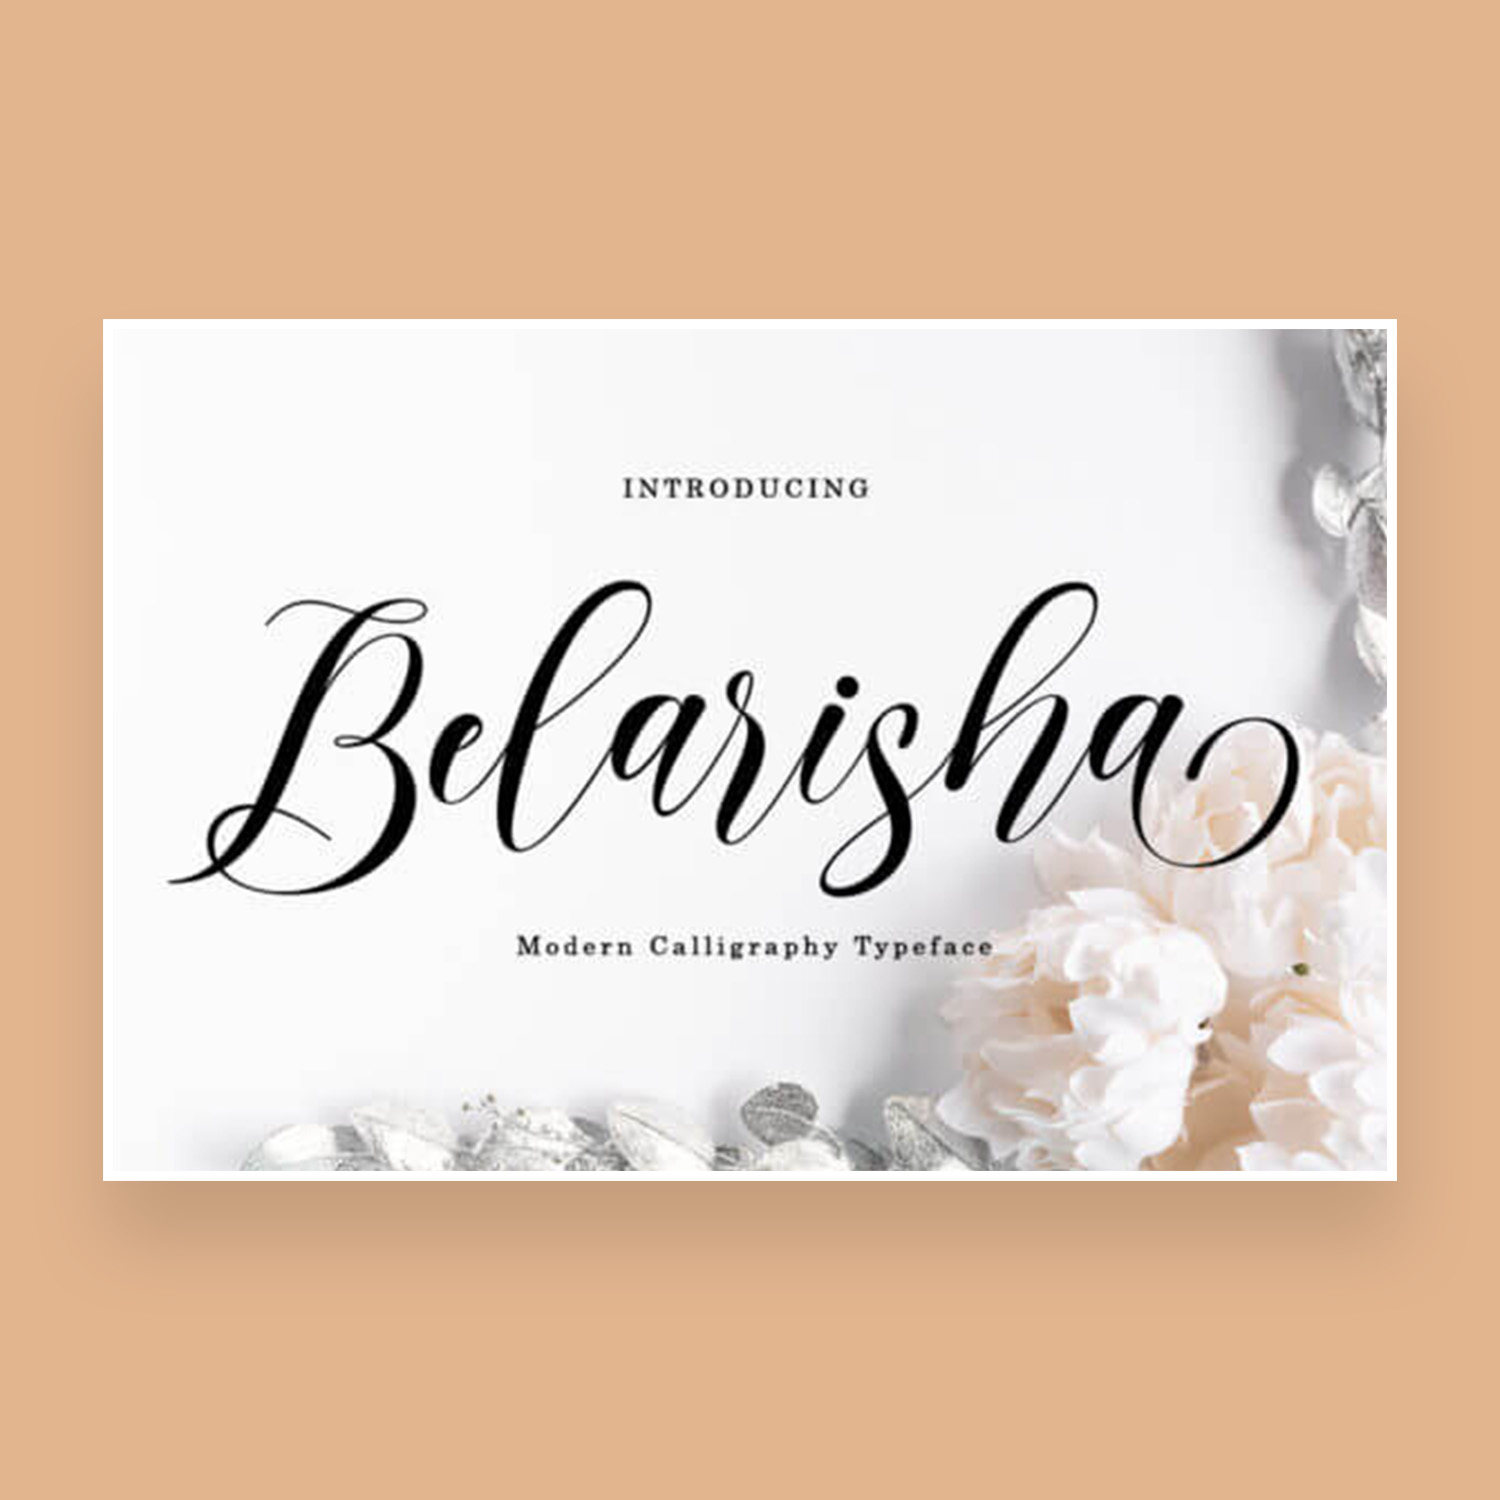 belarisha luxurious and elegant script font cover image.